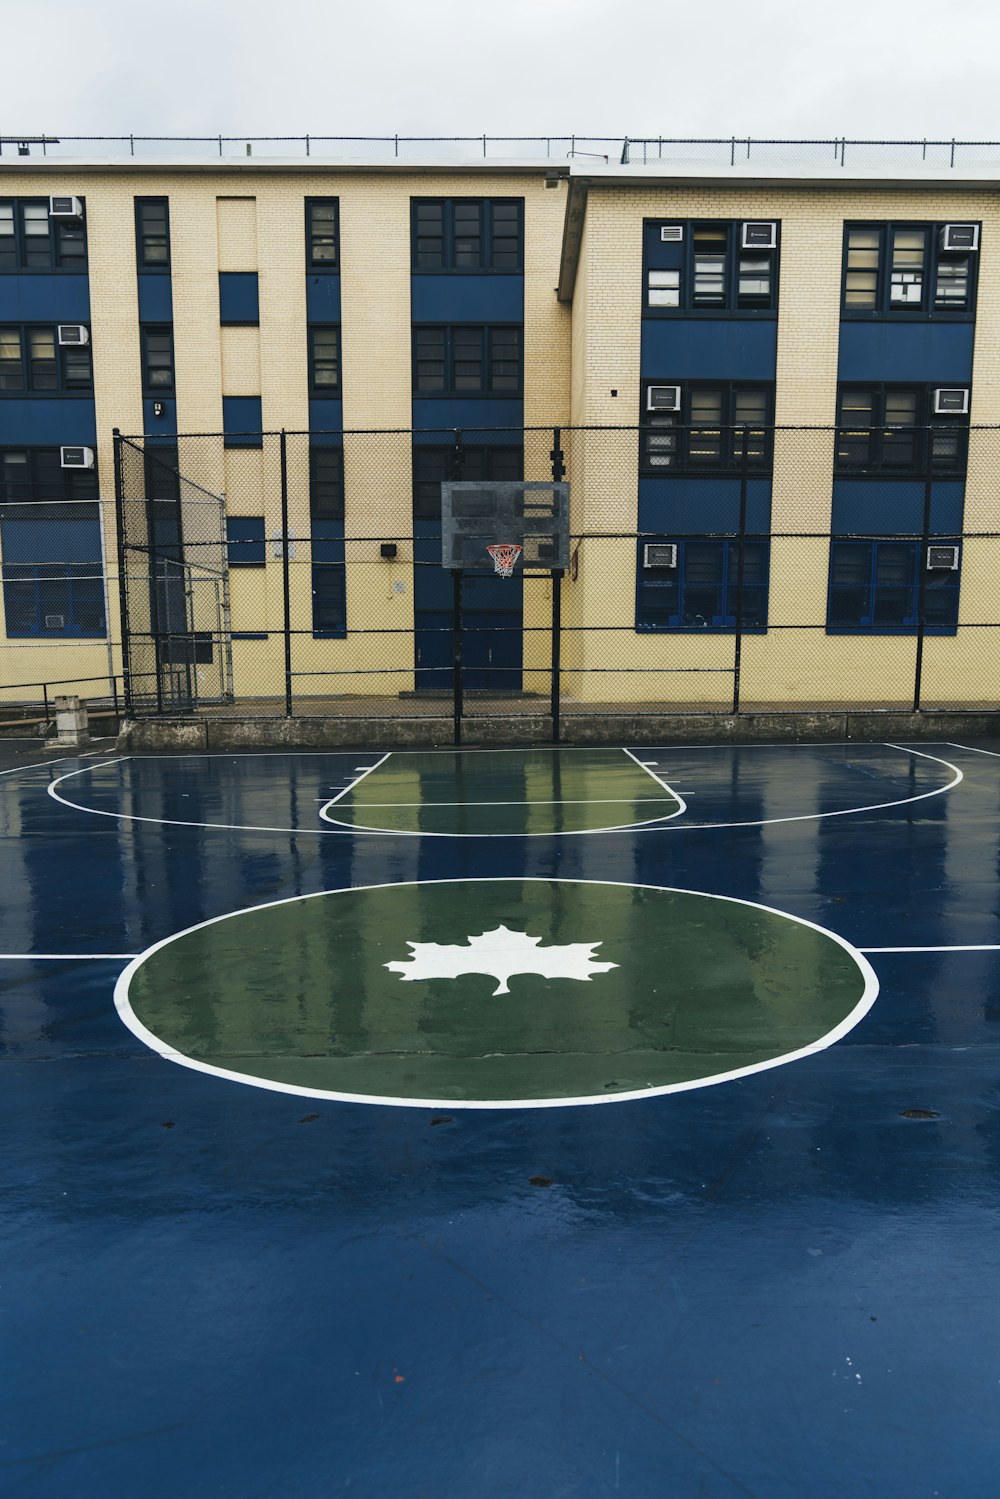 una cancha de baloncesto frente a un edificio